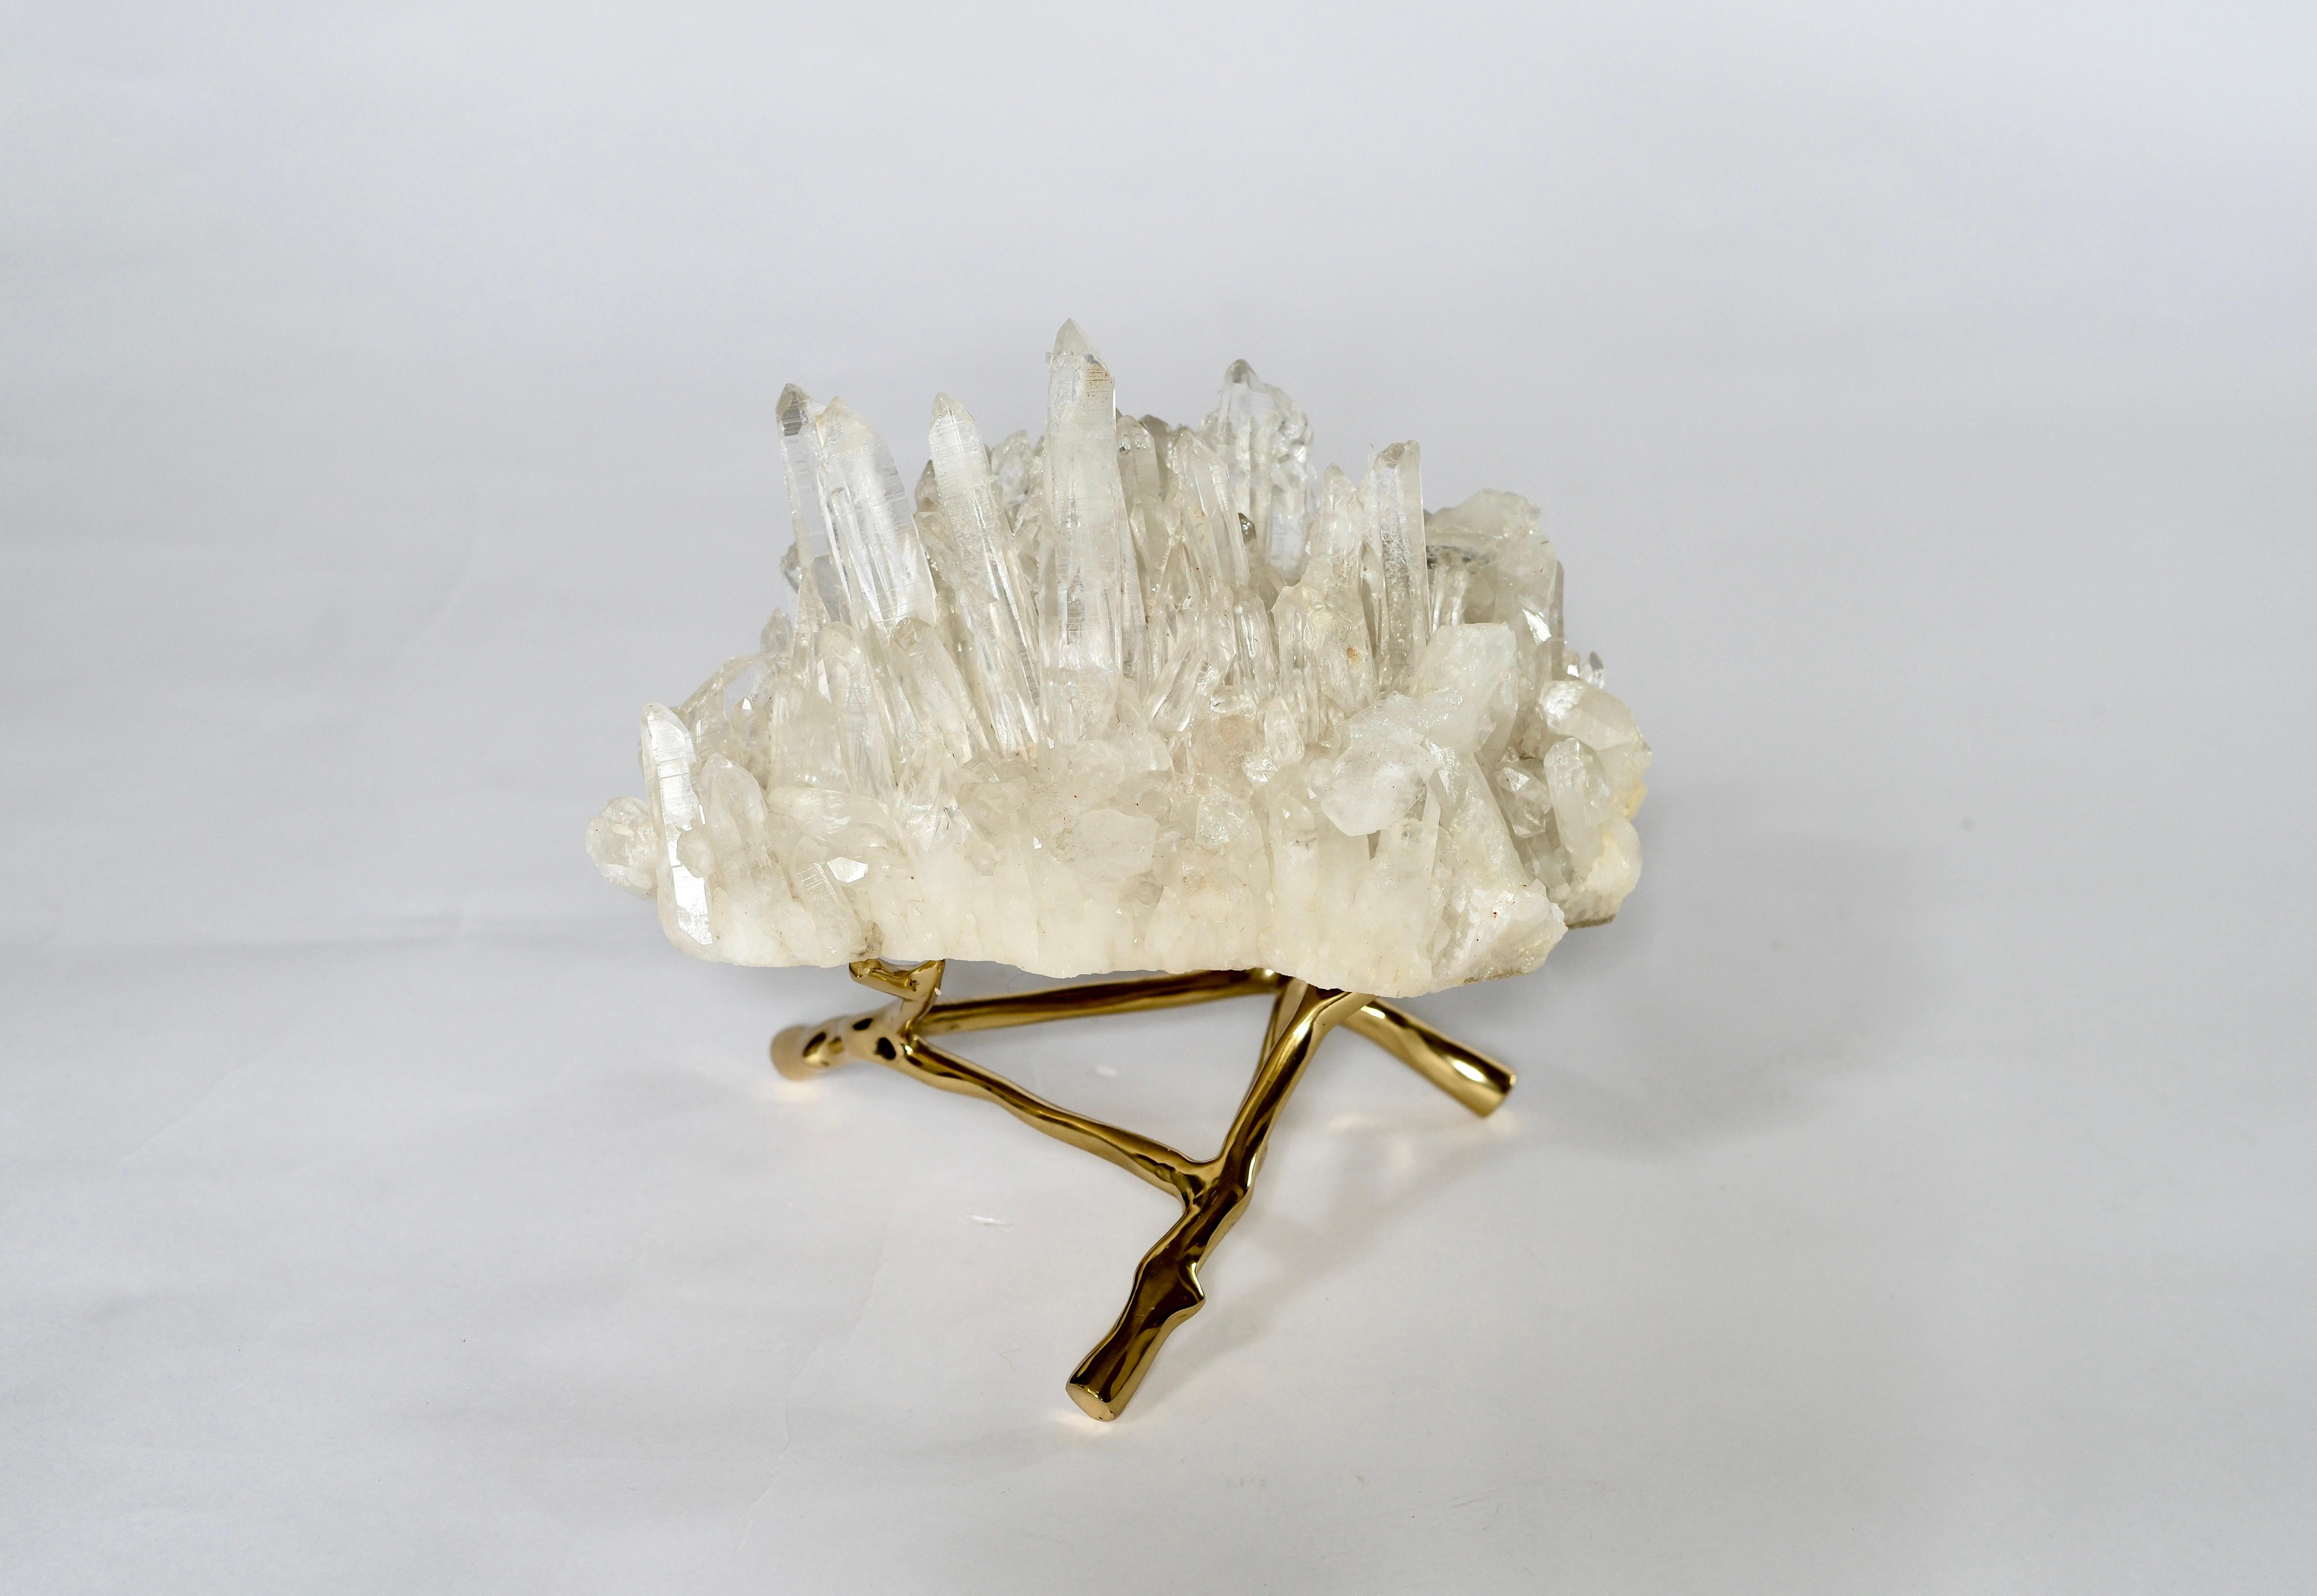 Natural rock crystal sculpture.